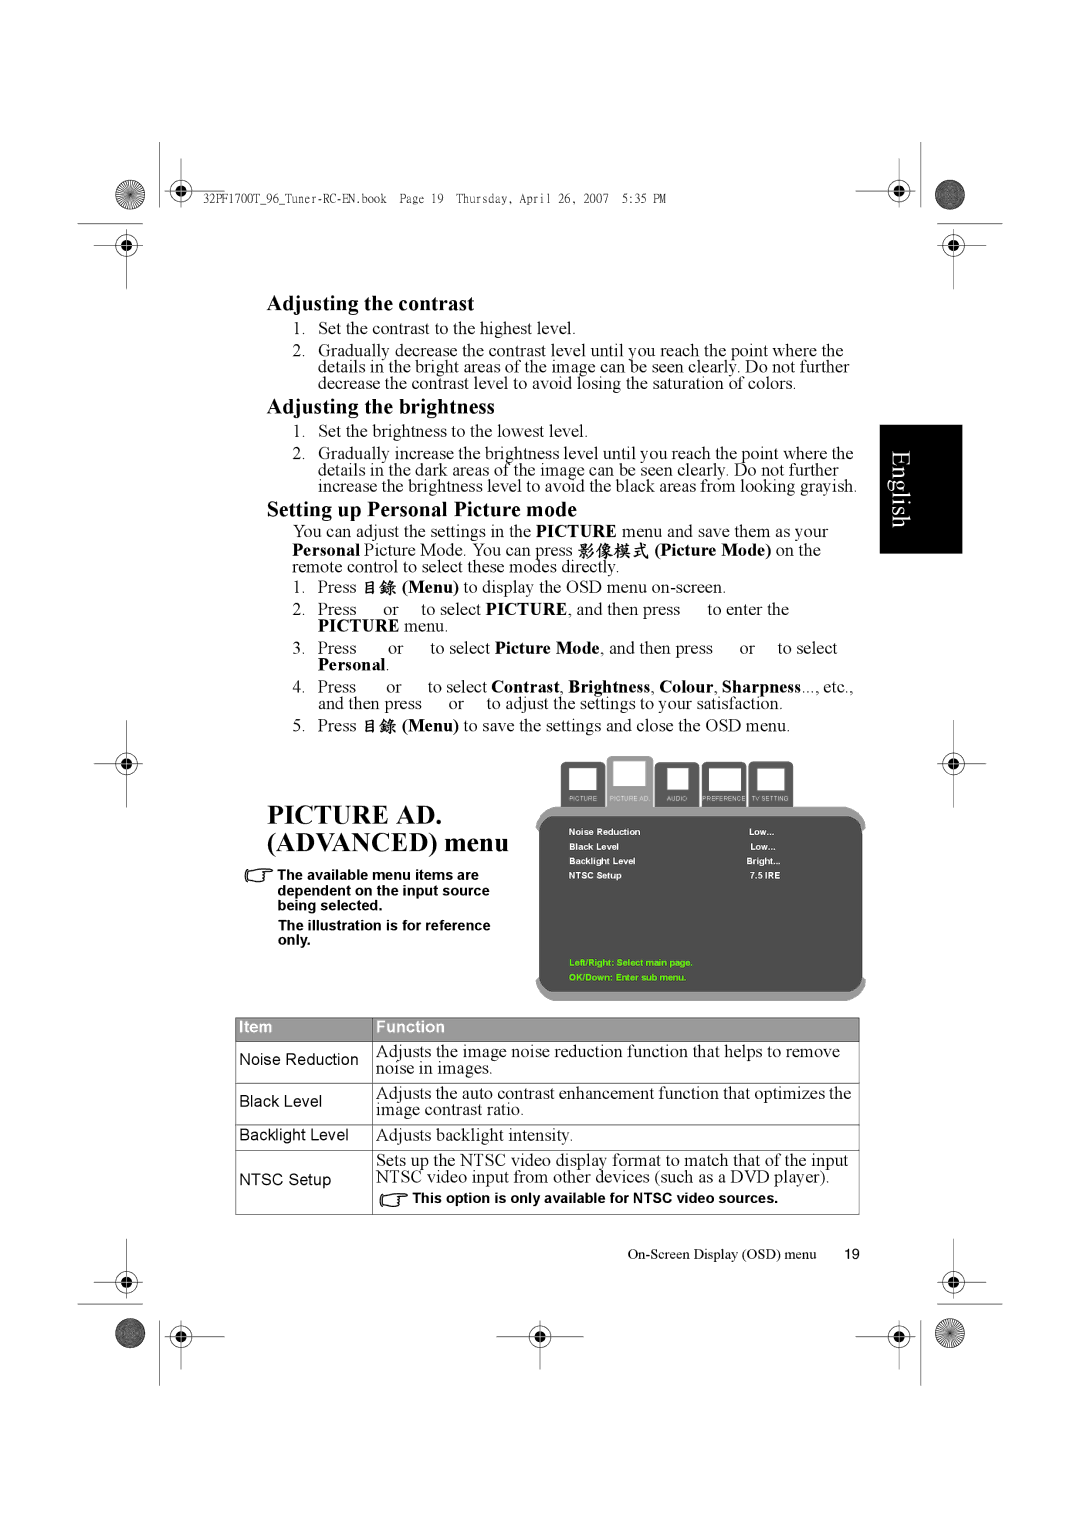 Philips 32PF1700T/96 manual Picture AD. Advanced menu, Adjusting the contrast, Adjusting the brightness 